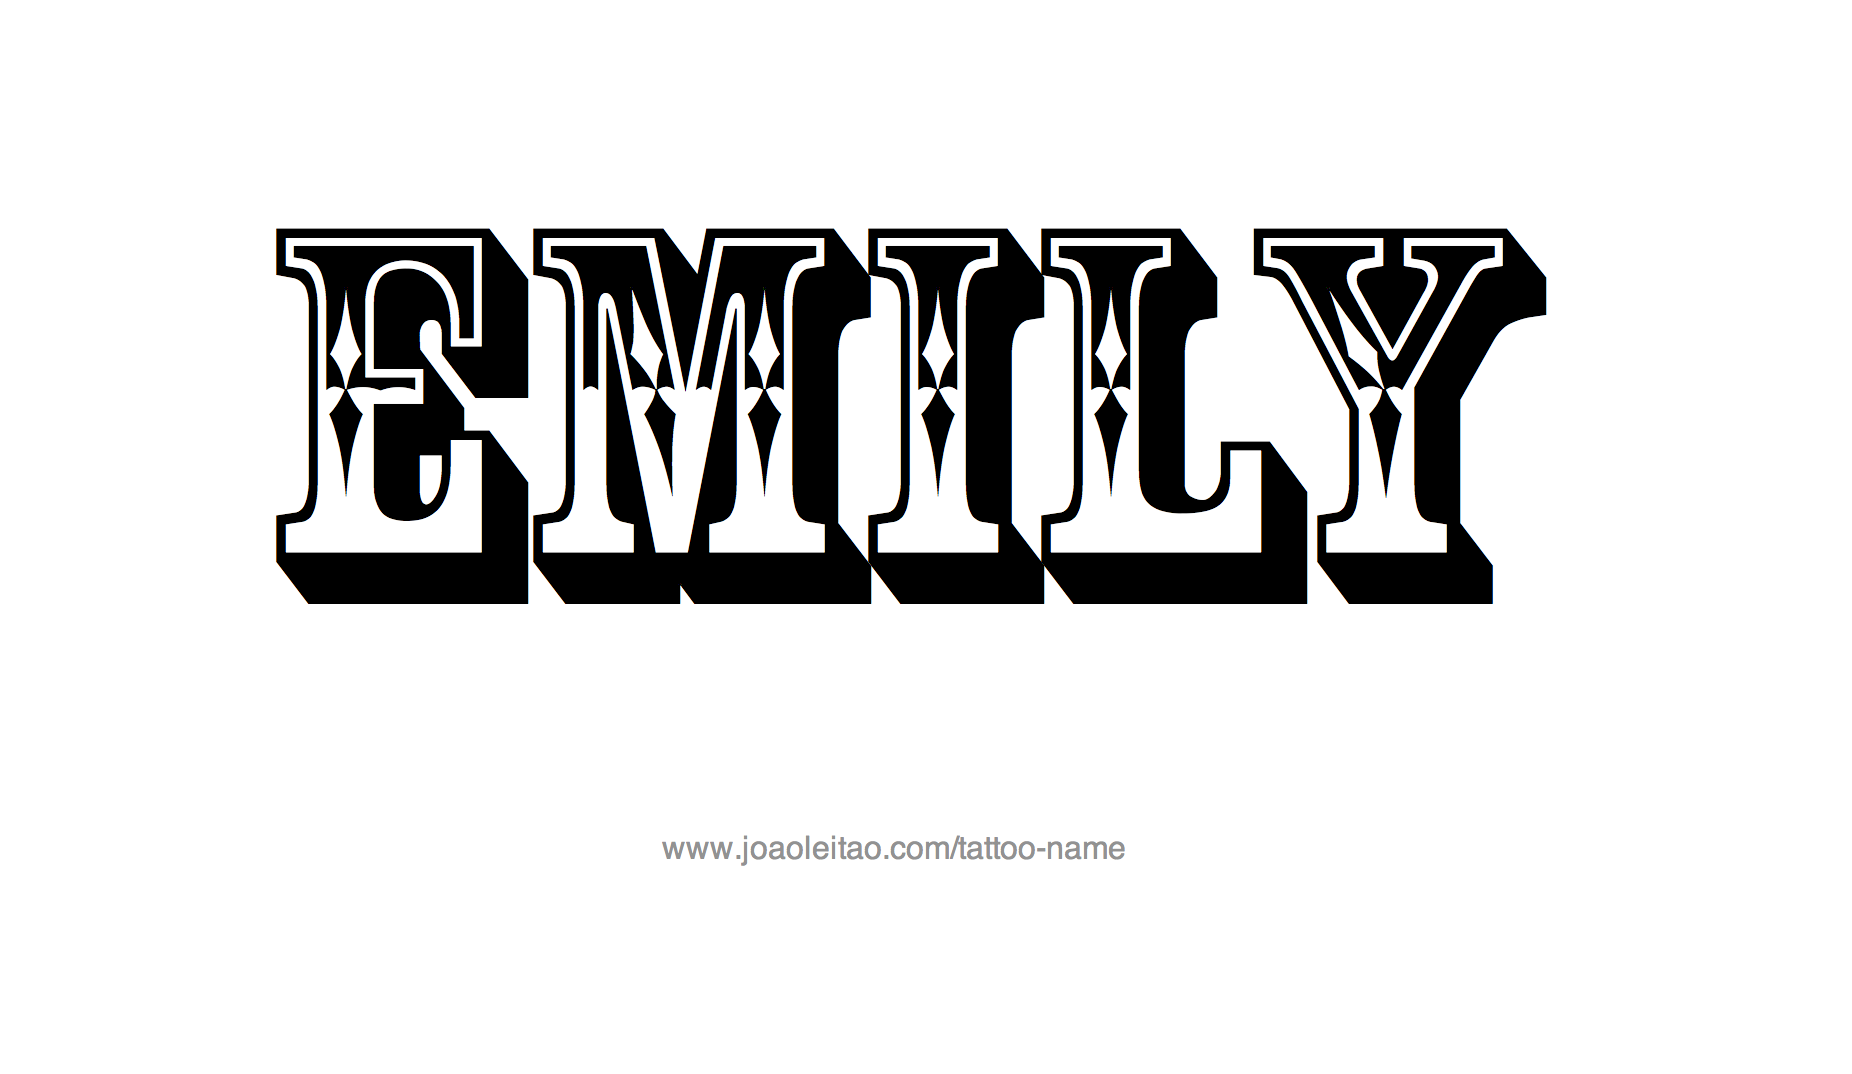 https://www.joaoleitao.com/tattoo-name/images/tattoo-design-female-name-emily%20(11).png